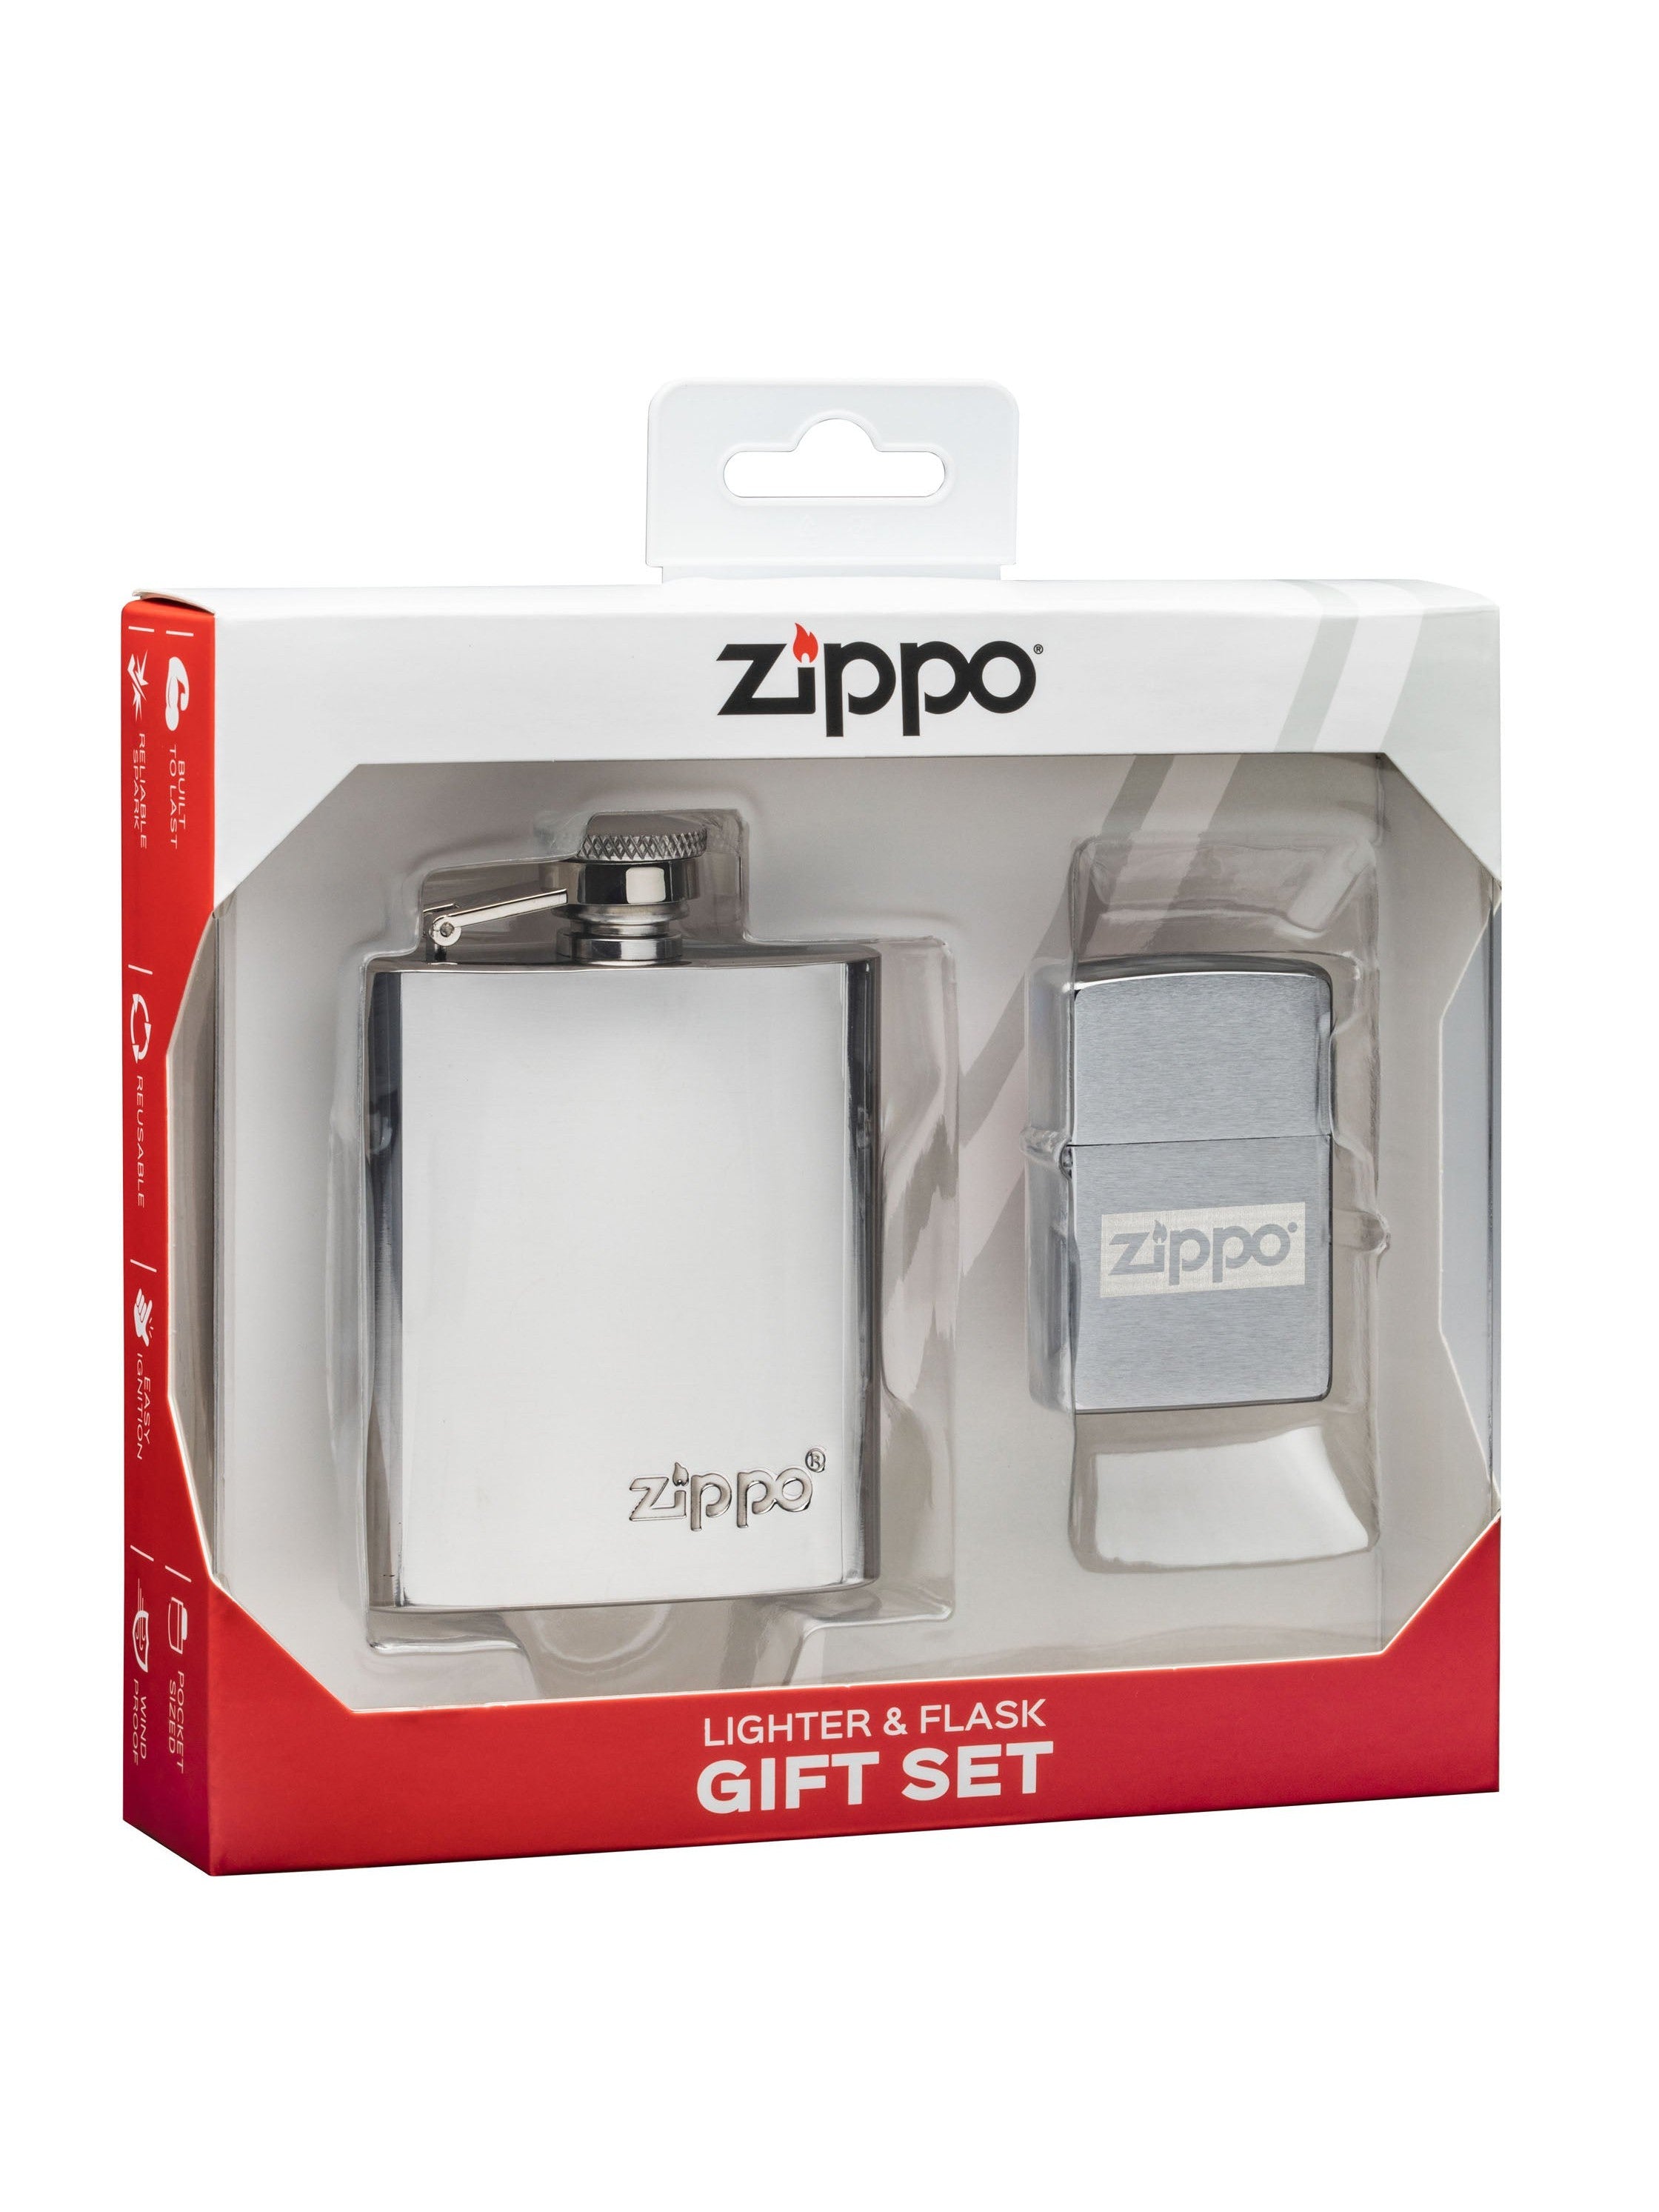 Zippo Genuine Wick 1 Count Cards - Wholesale Supplier - CB Distributors